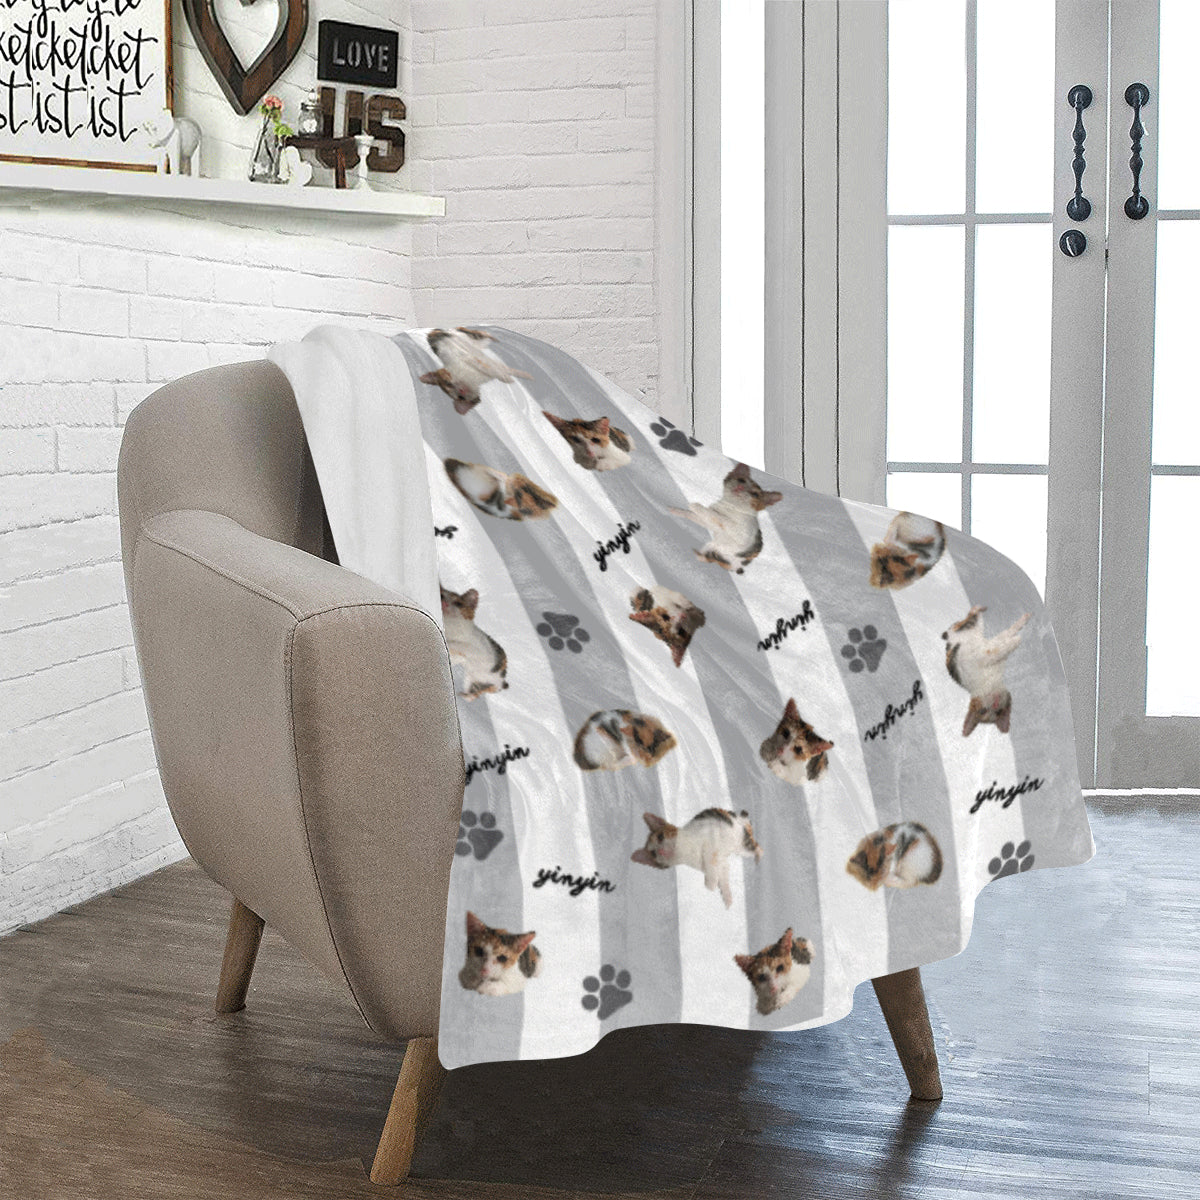 寵物或人像間條客製毛毯冷毛毯 Pet & Stiped pattern- Custom Blanket with tailor-made gift - HKGIFTFORU